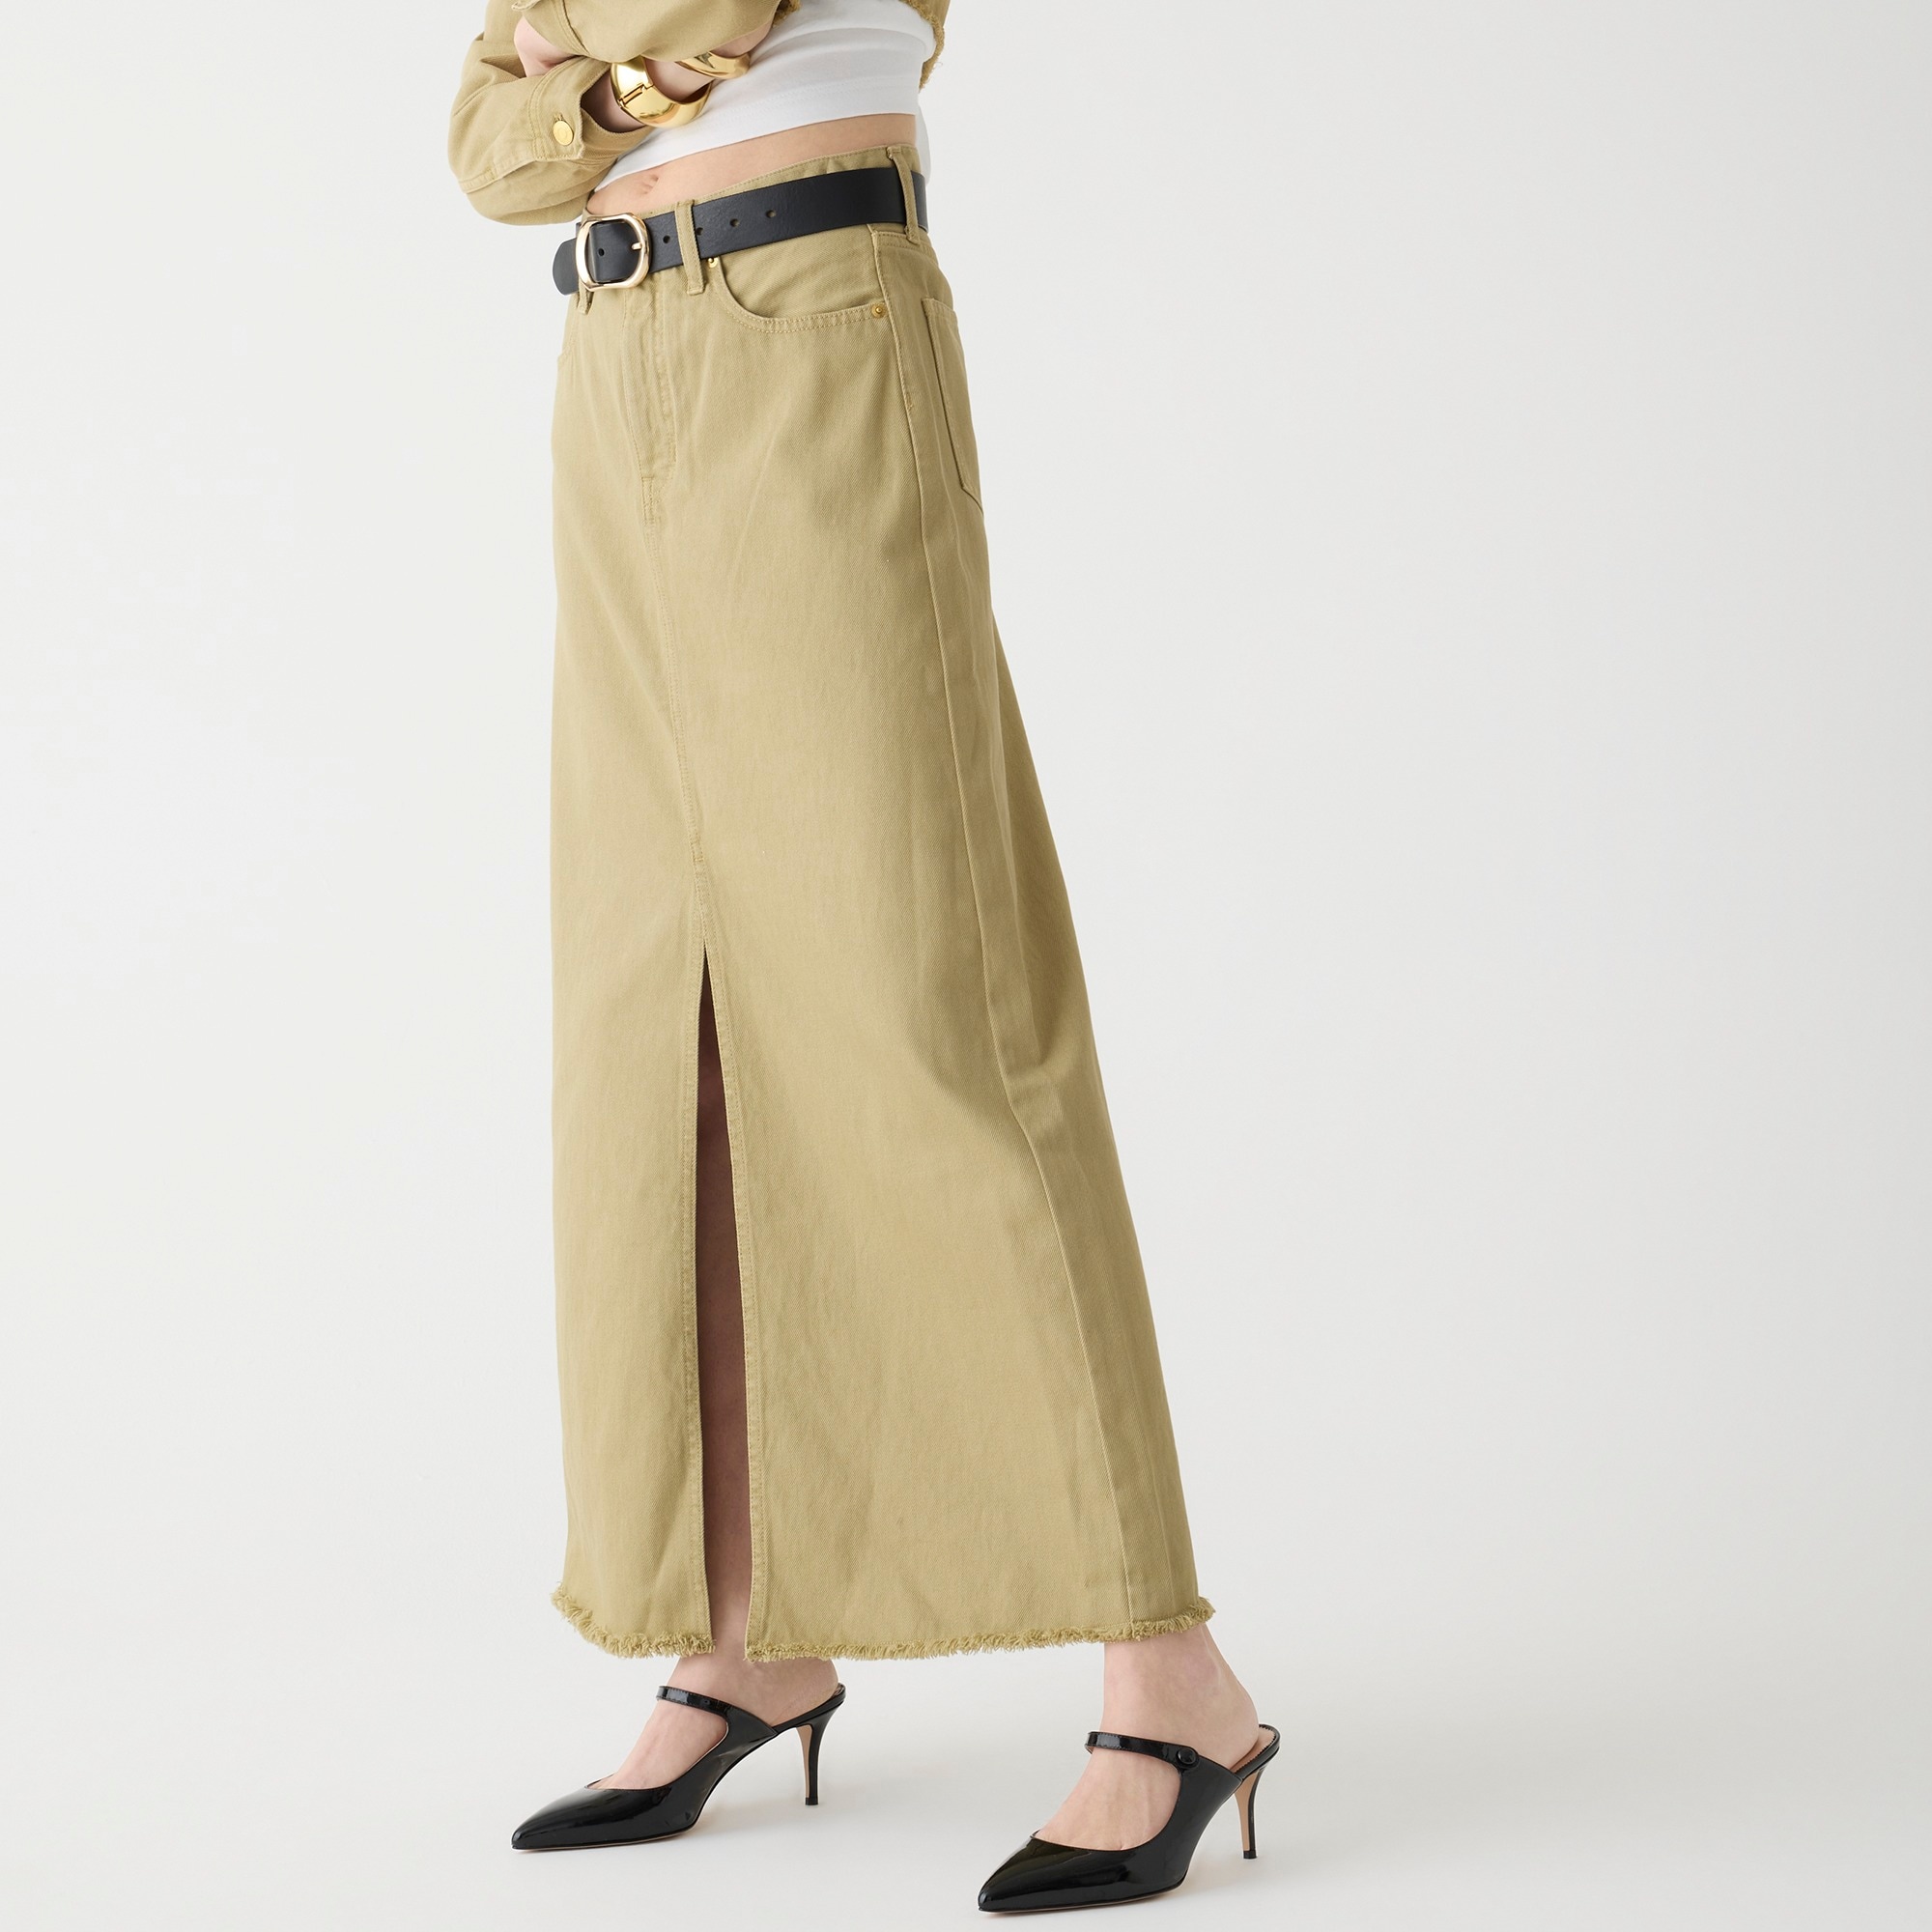  Classic denim maxi skirt in khaki